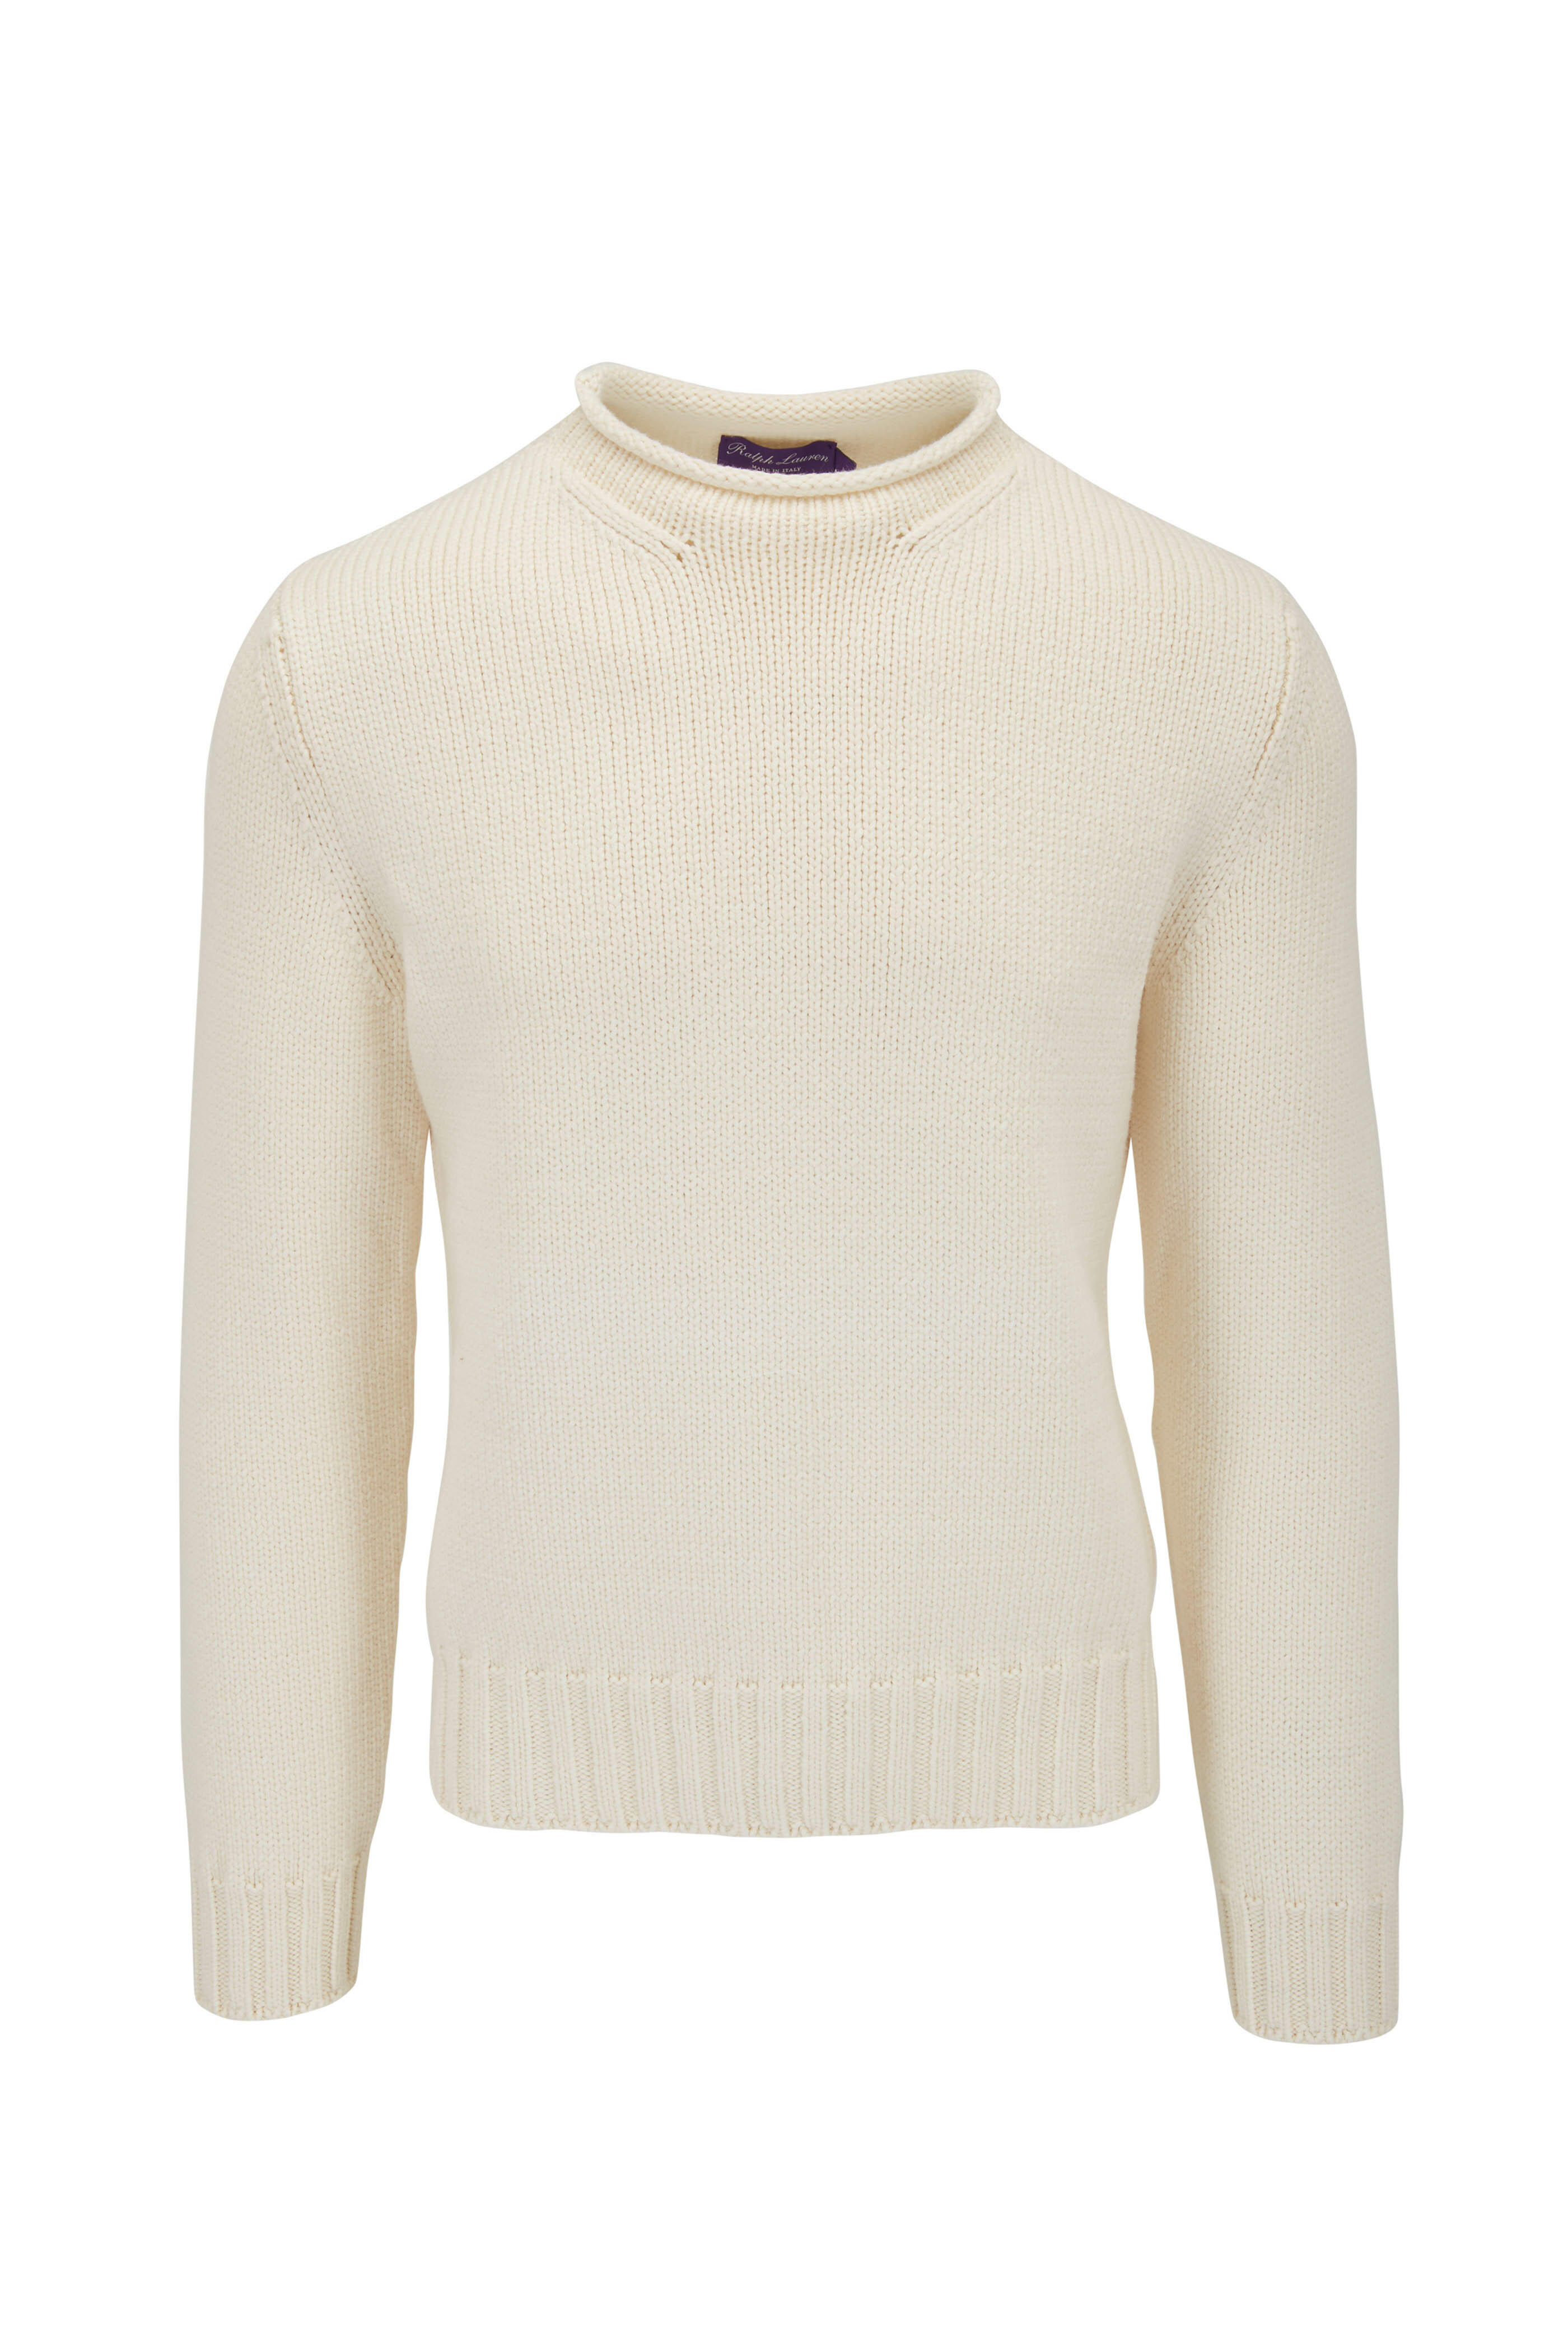 Ralph Lauren - Lux Cream Cotton Blend Sweater